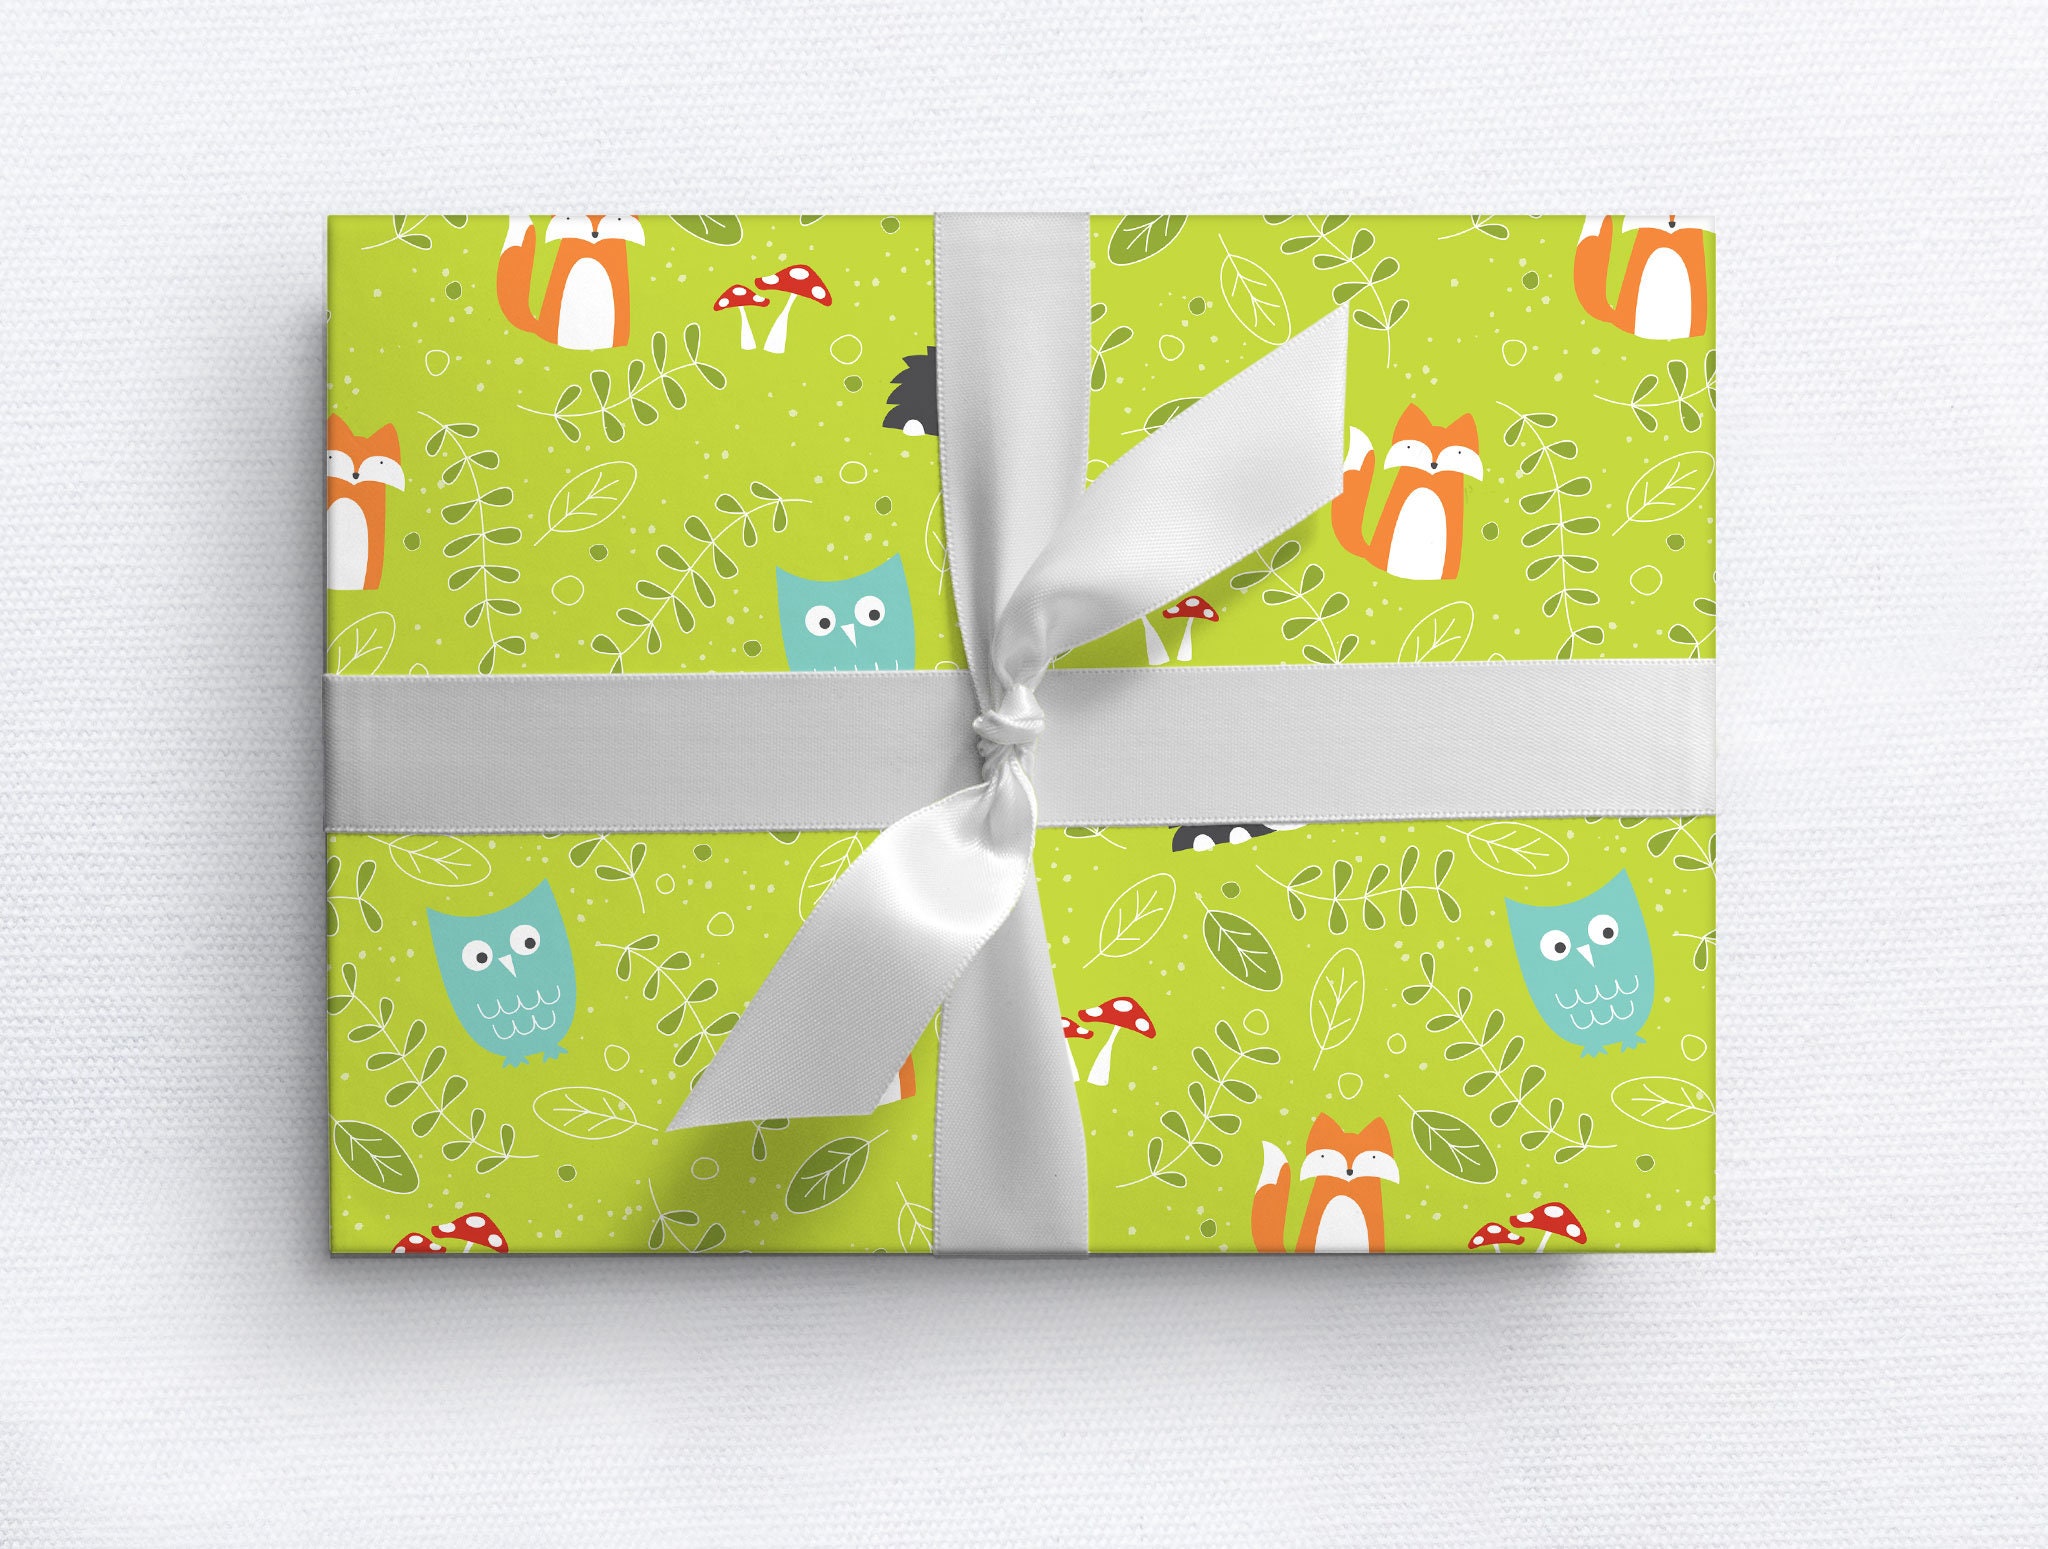 Woodland Animals Gift Wrap — Wildship Studio